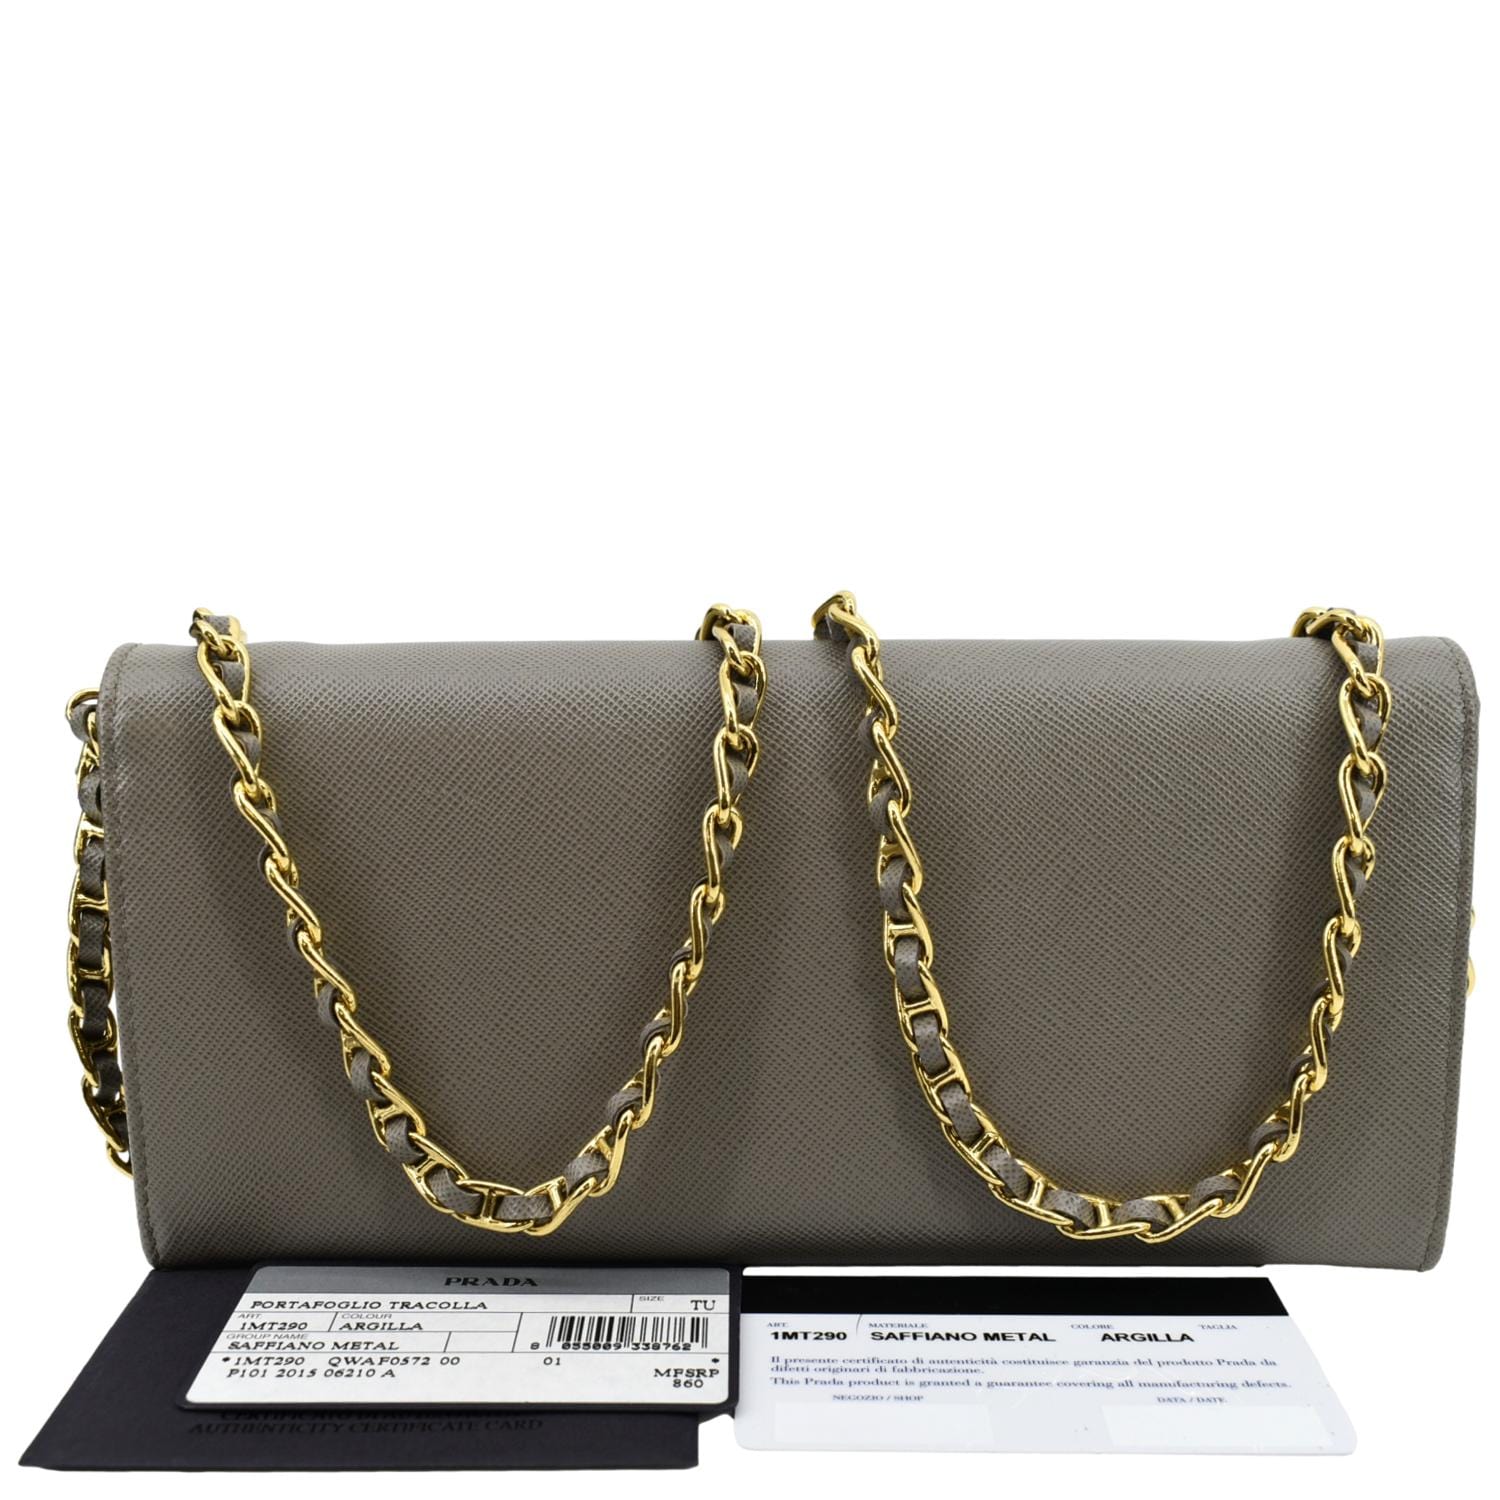 Prada Saffiano Leather Chain Wallet